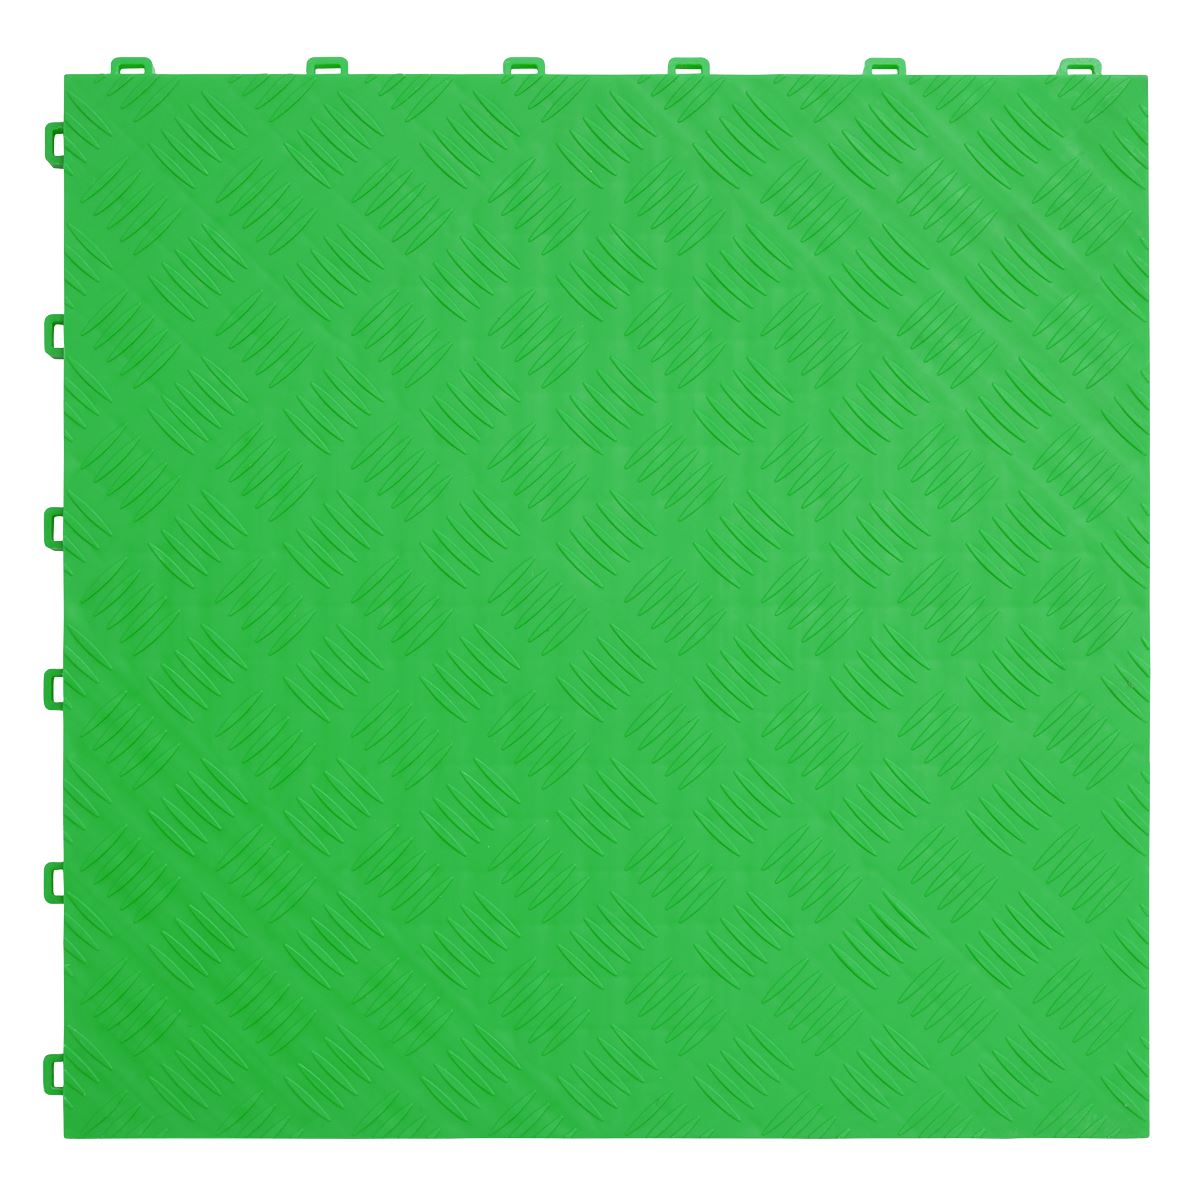 Sealey Polypropylene Floor Tile - Green Treadplate 400 x 400mm - Pack of 9